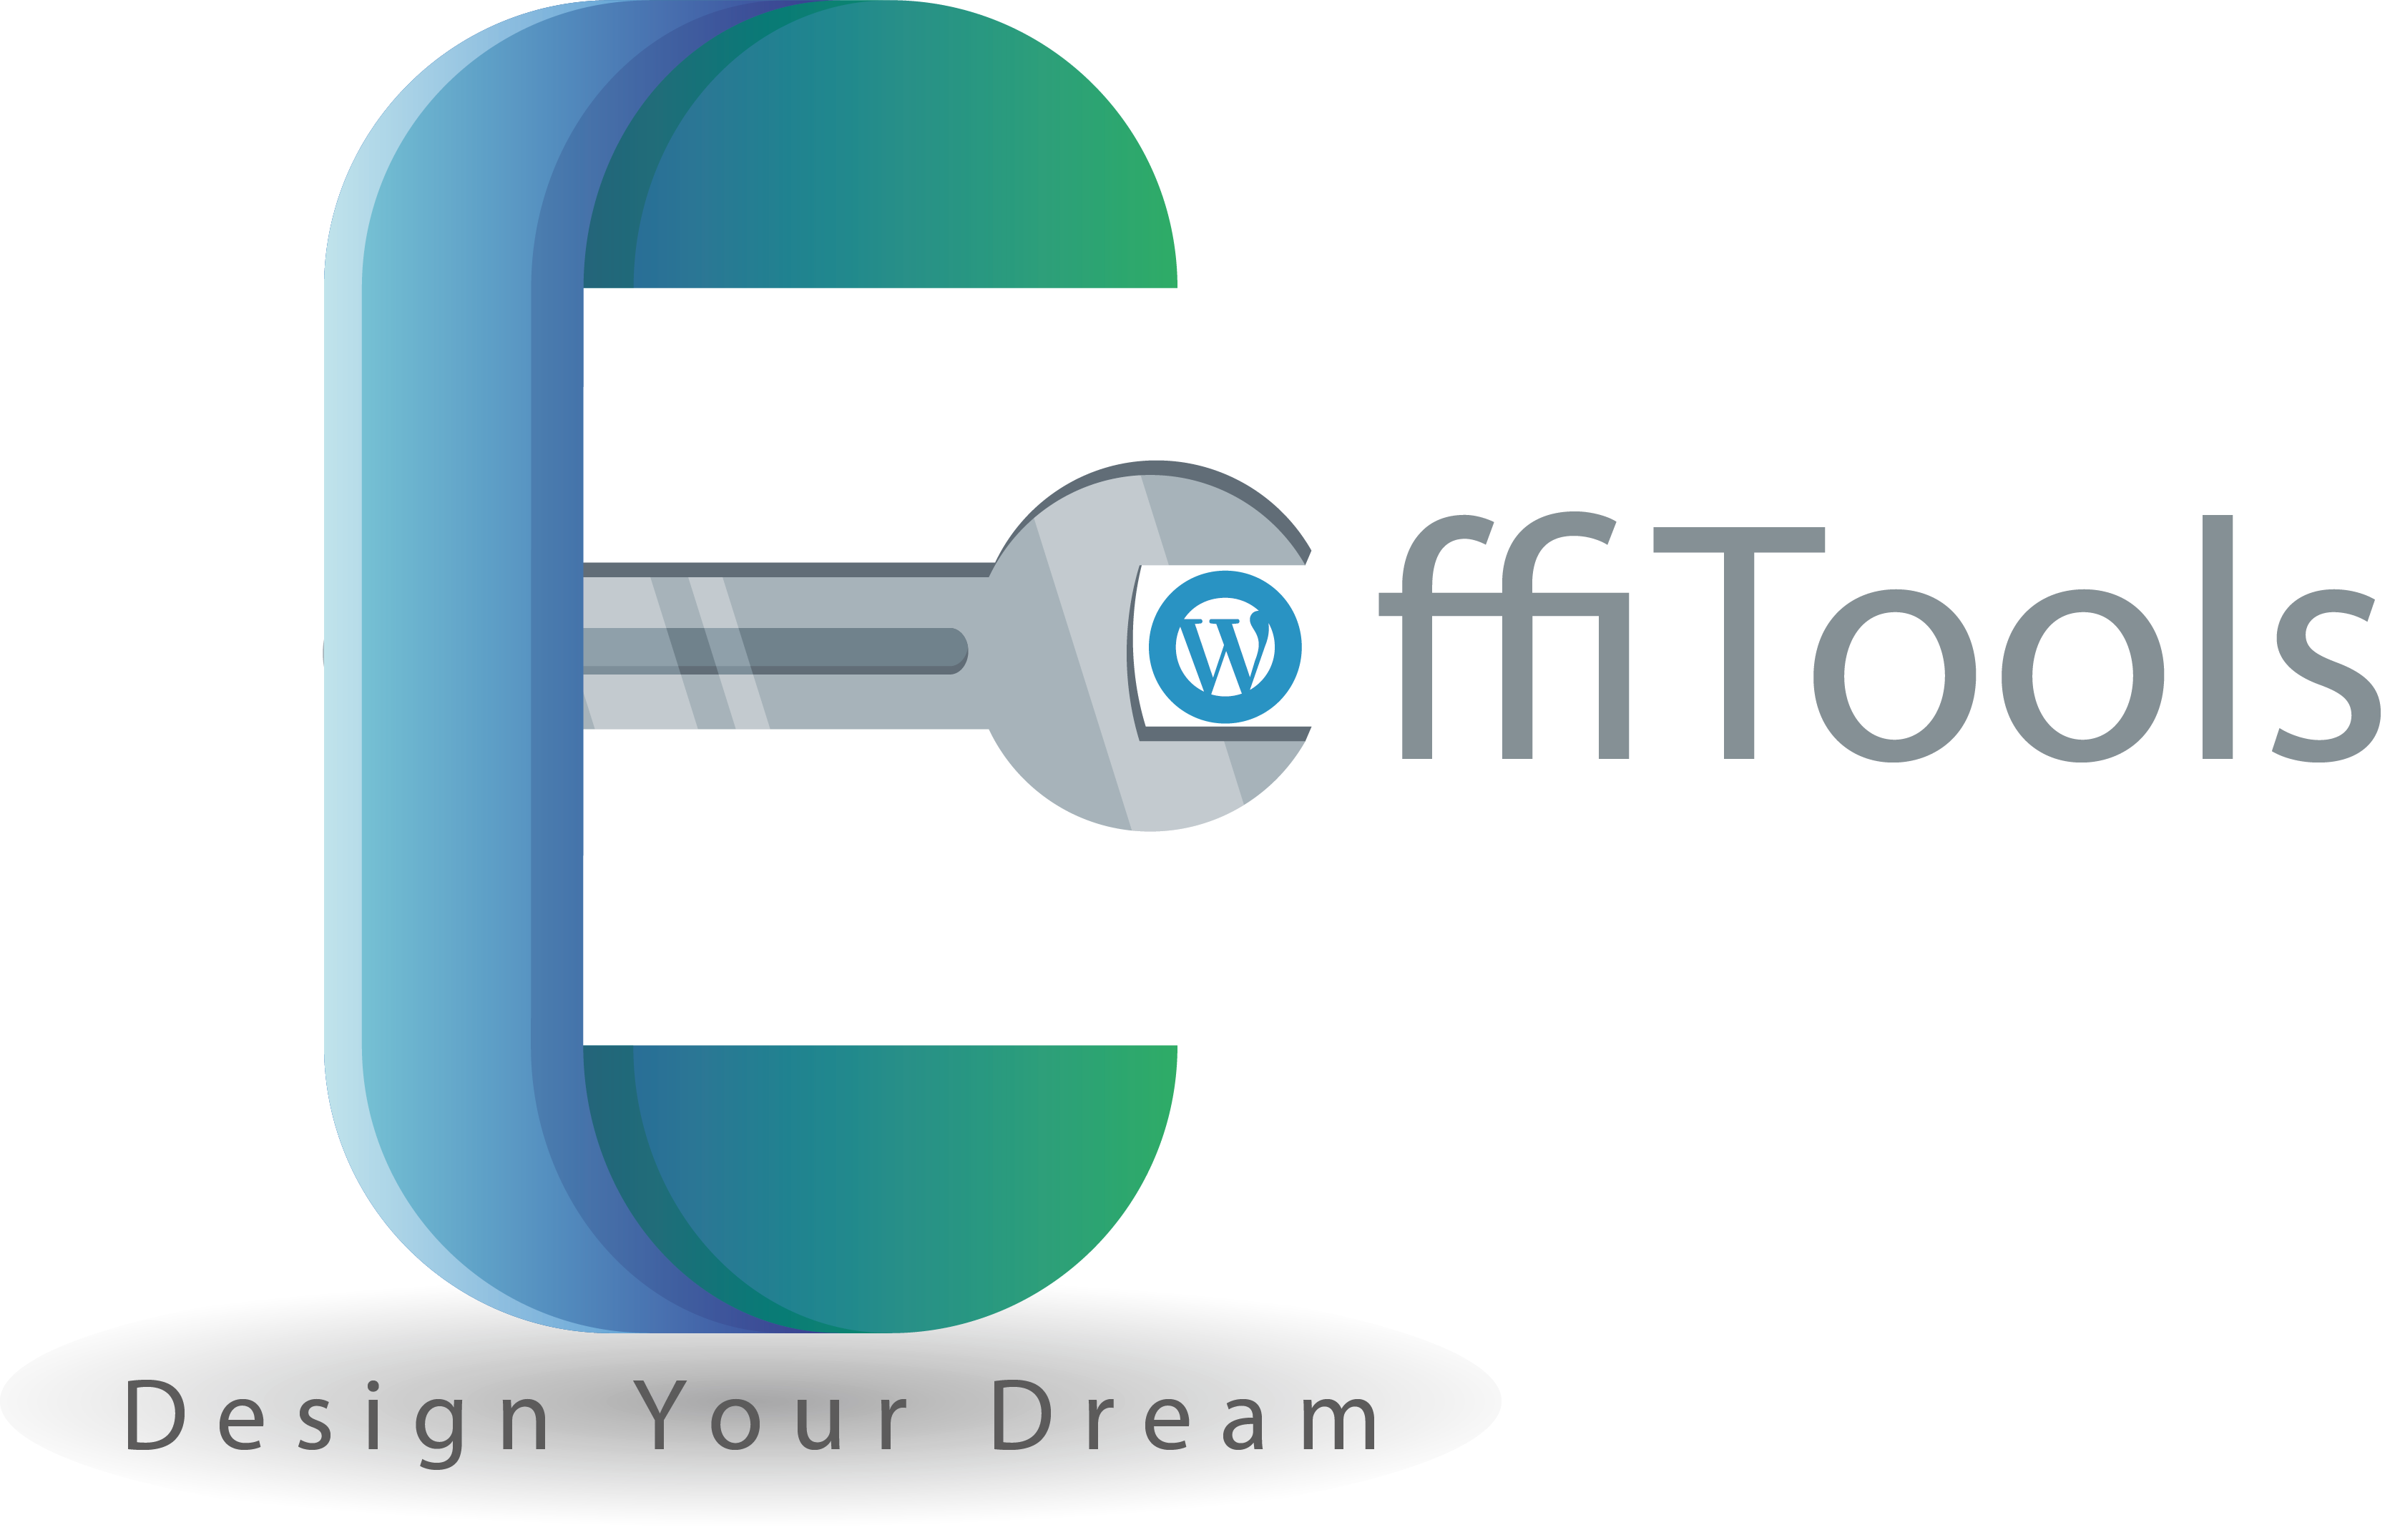 EffiTools LLC